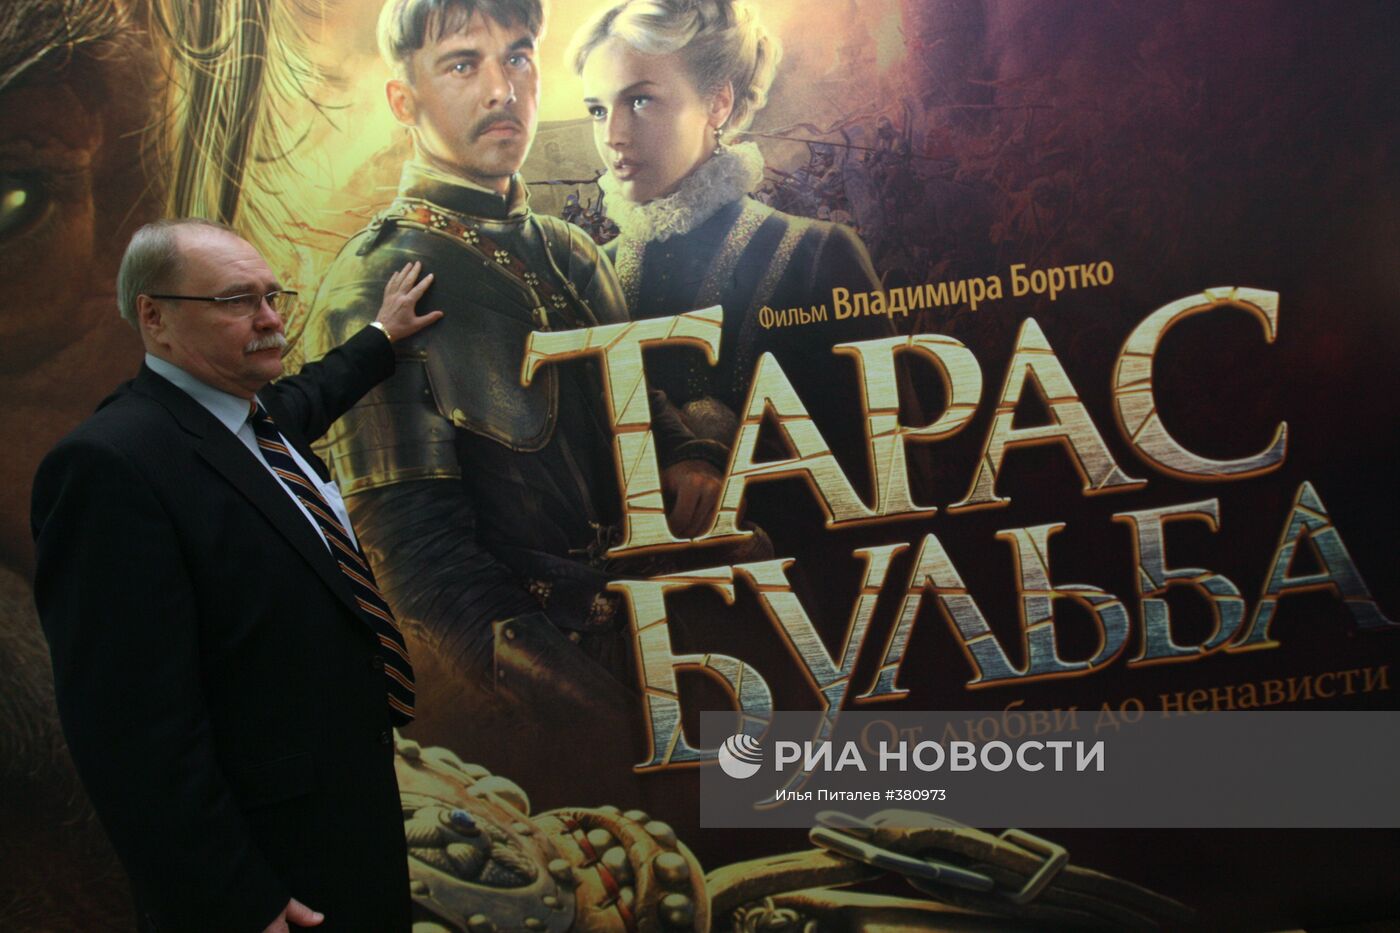 Презентация фильма "Тарас Бульба" в Москве